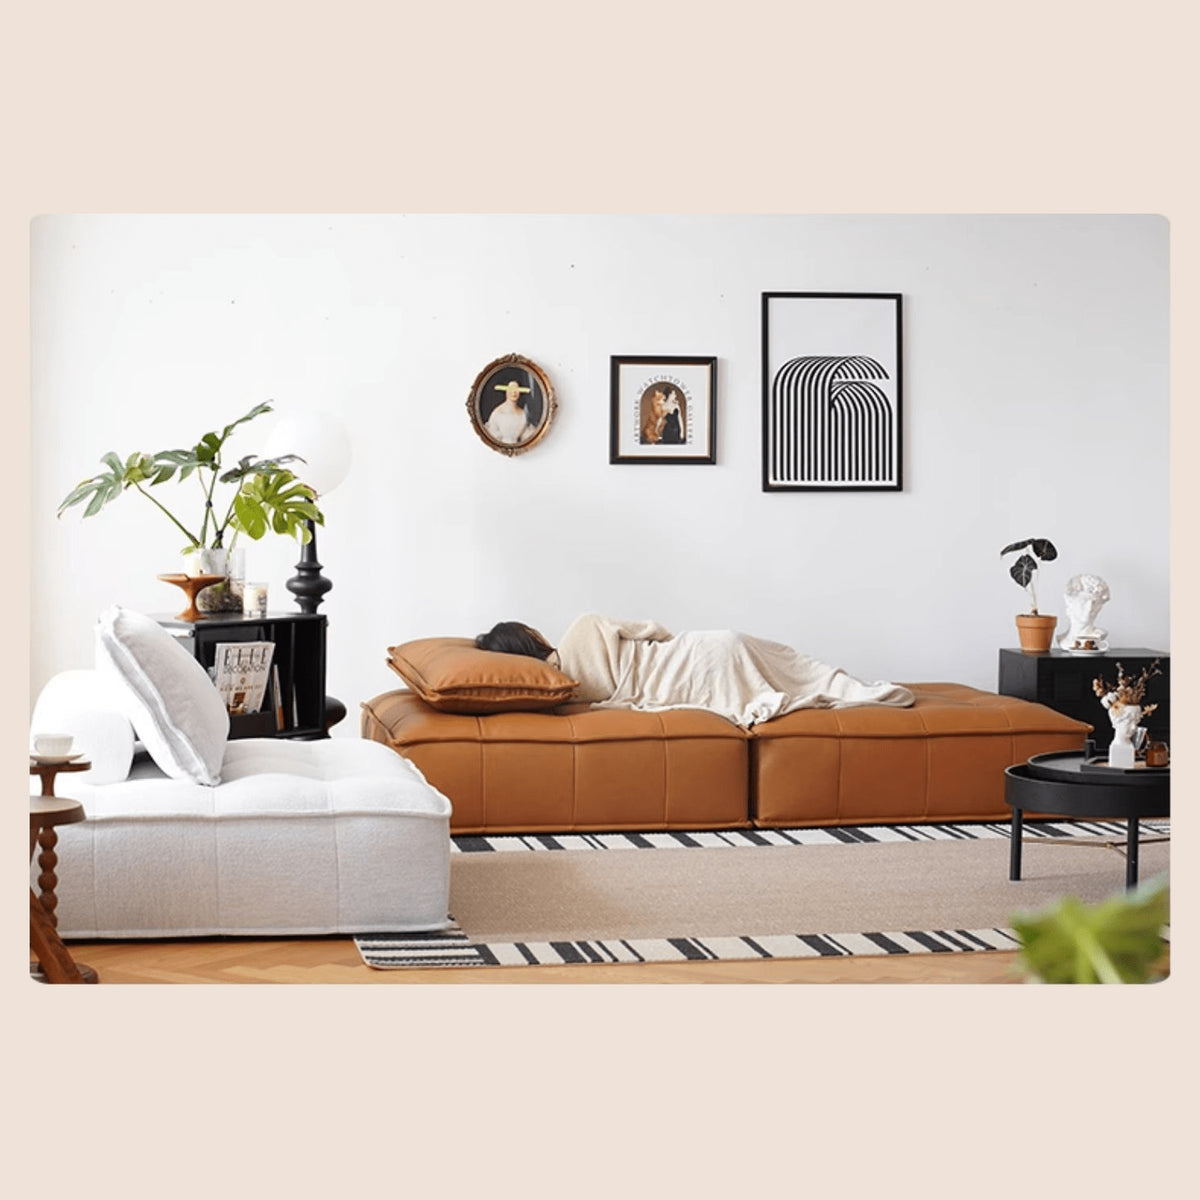 Stylish Modern Sofa in Light Gray and Brown Techno Fabric - Sleek Black Accents yw-181